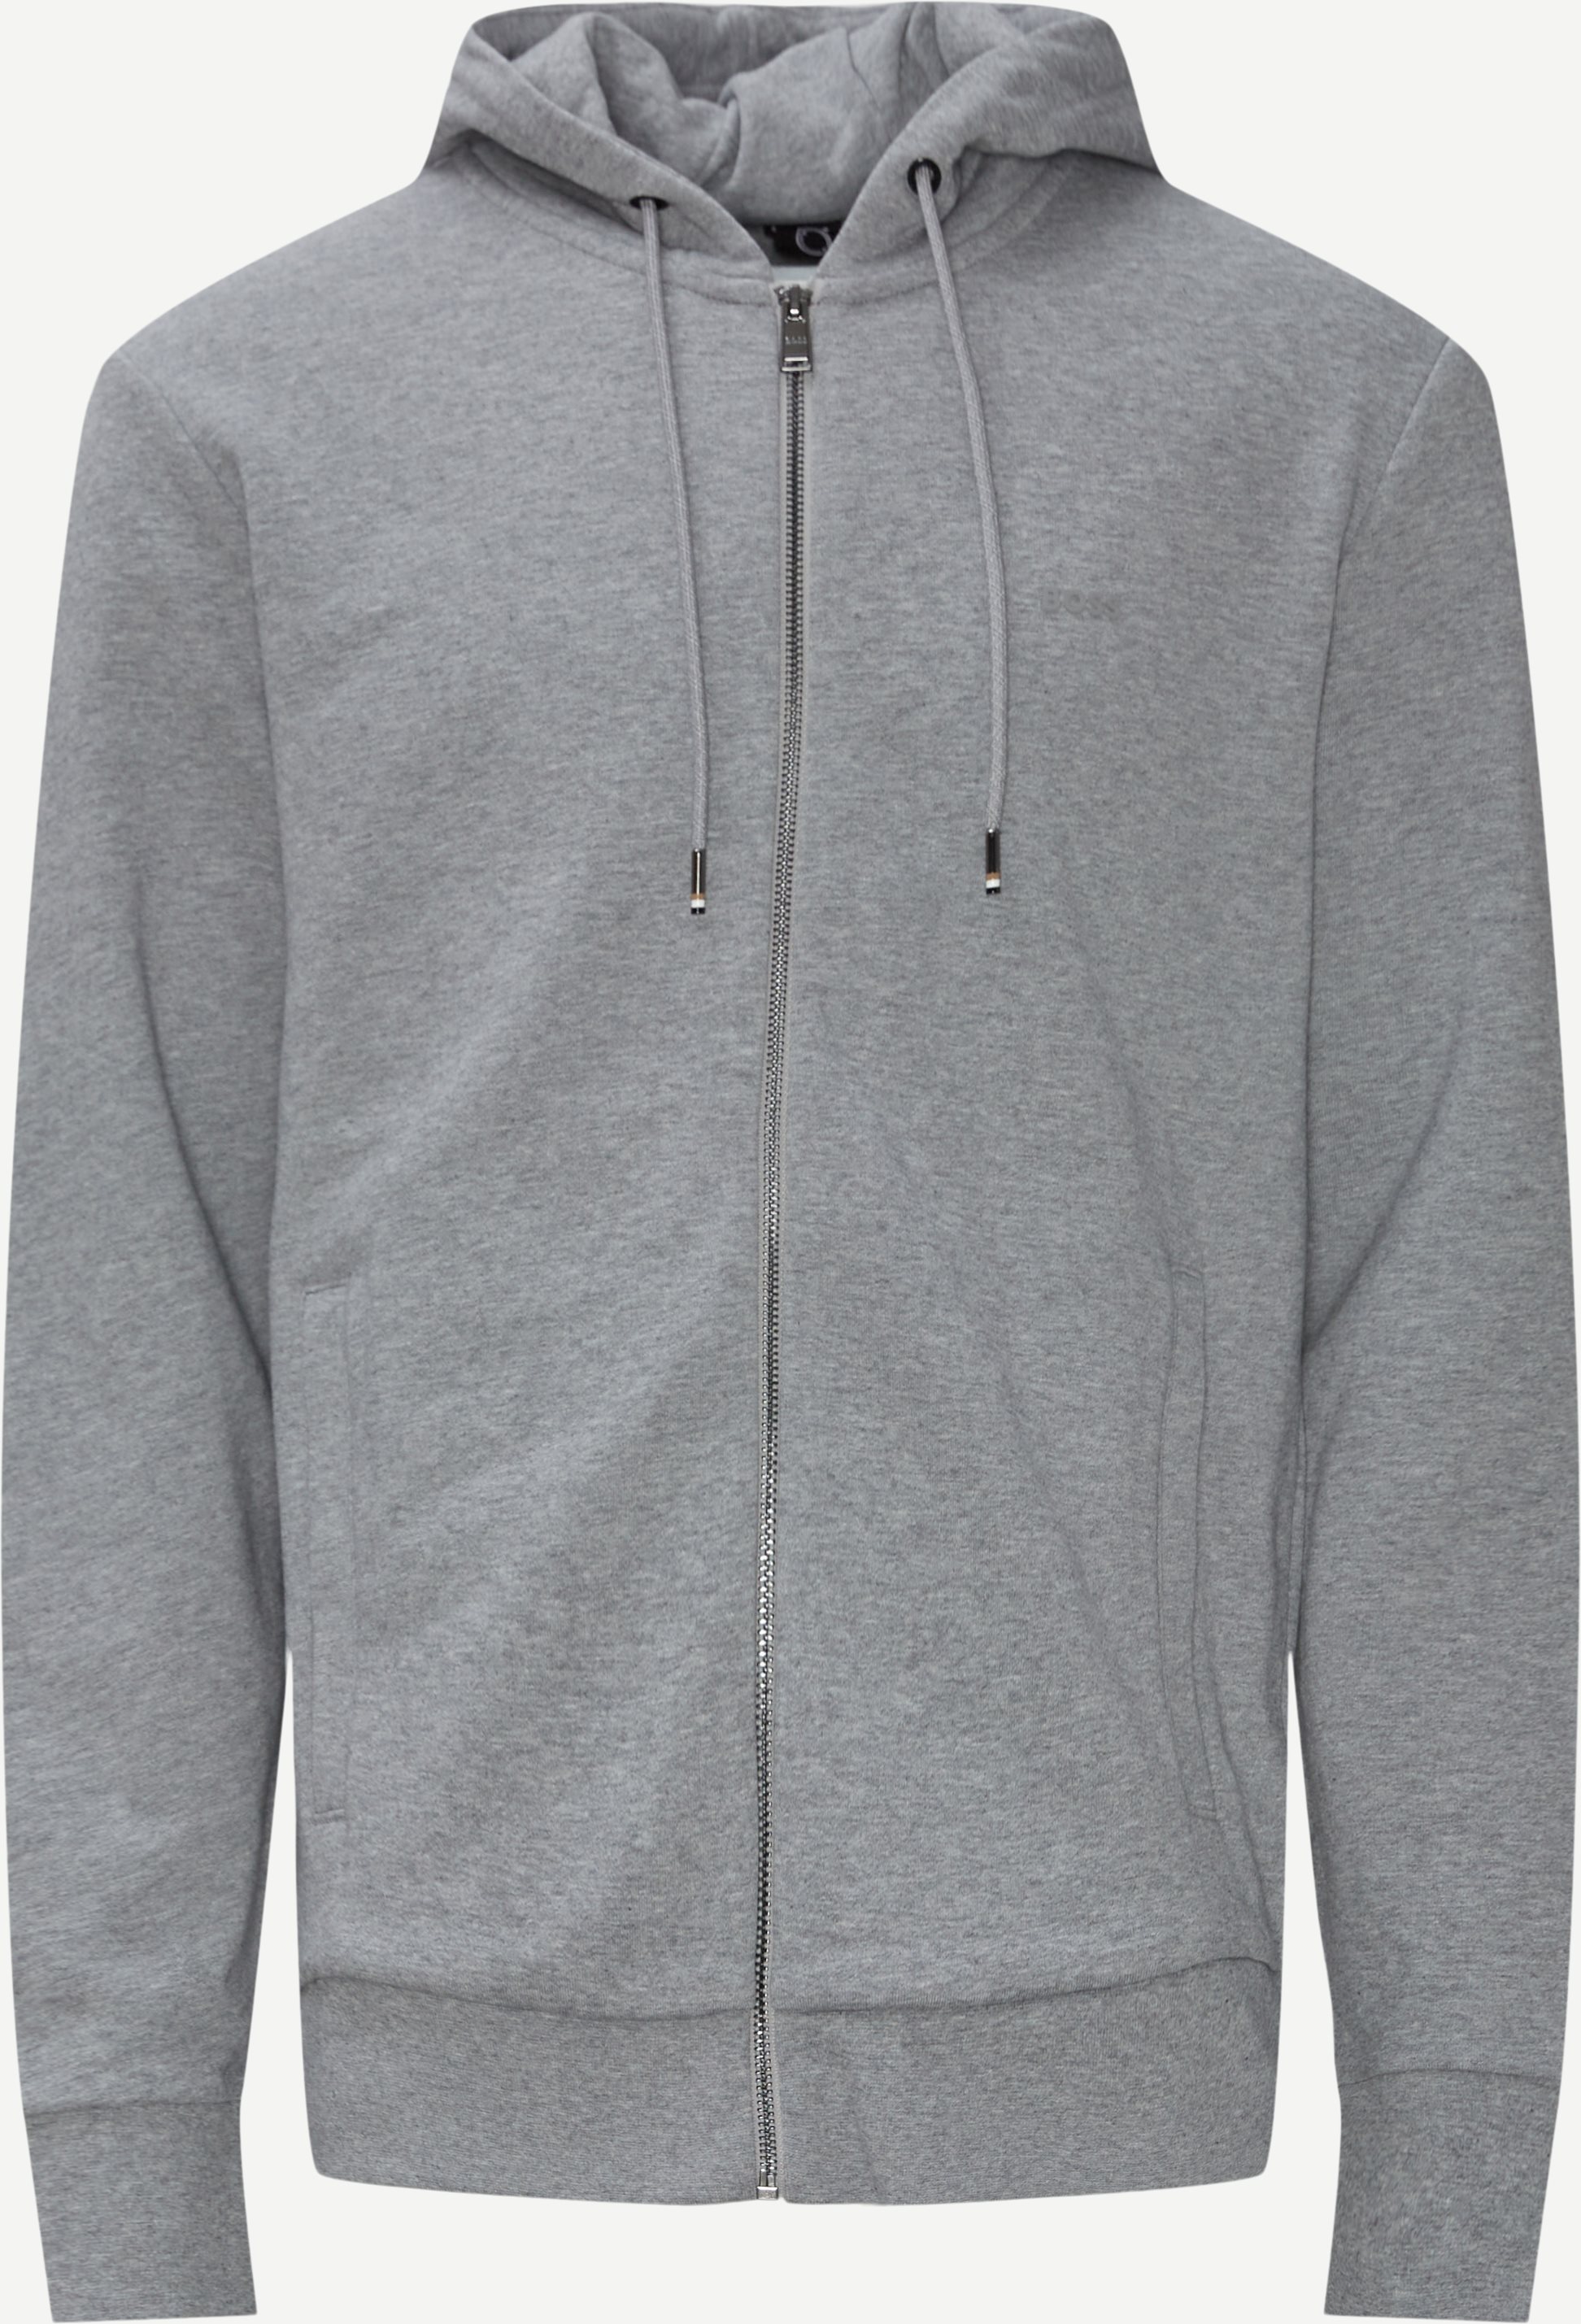 Seeger92 Hooded Sweatshirt - Sweatshirts - Regular fit - Grå